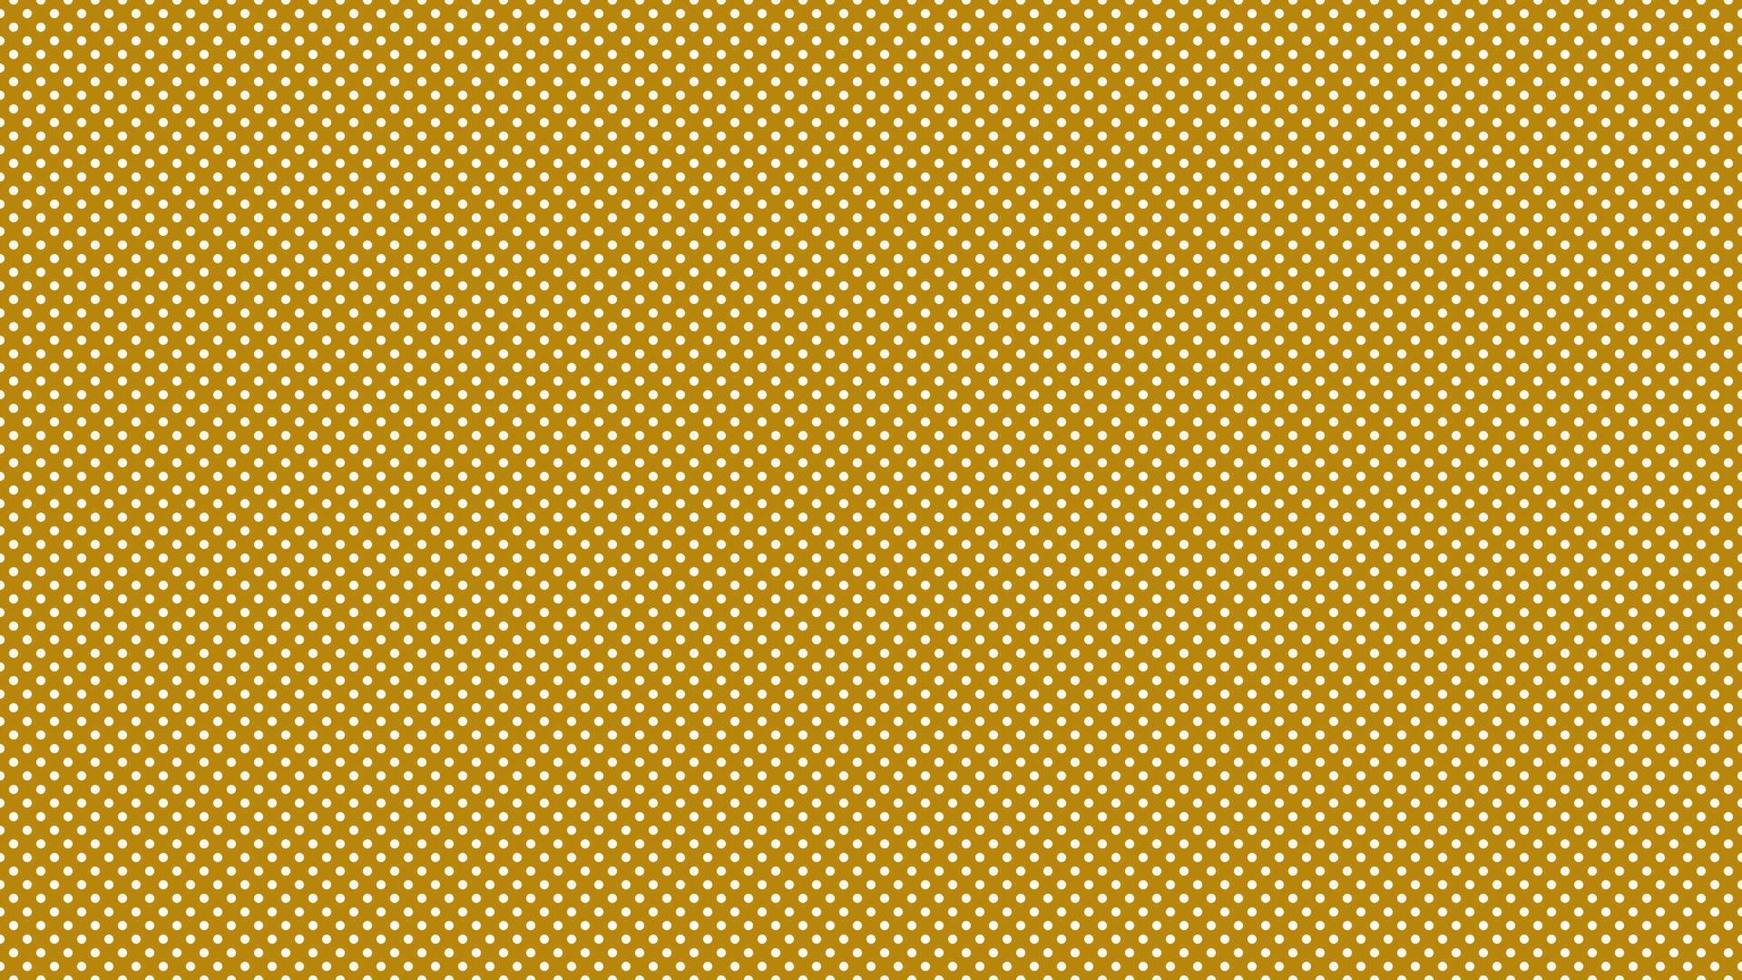 white color polka dots over dark goldenrod brown background vector